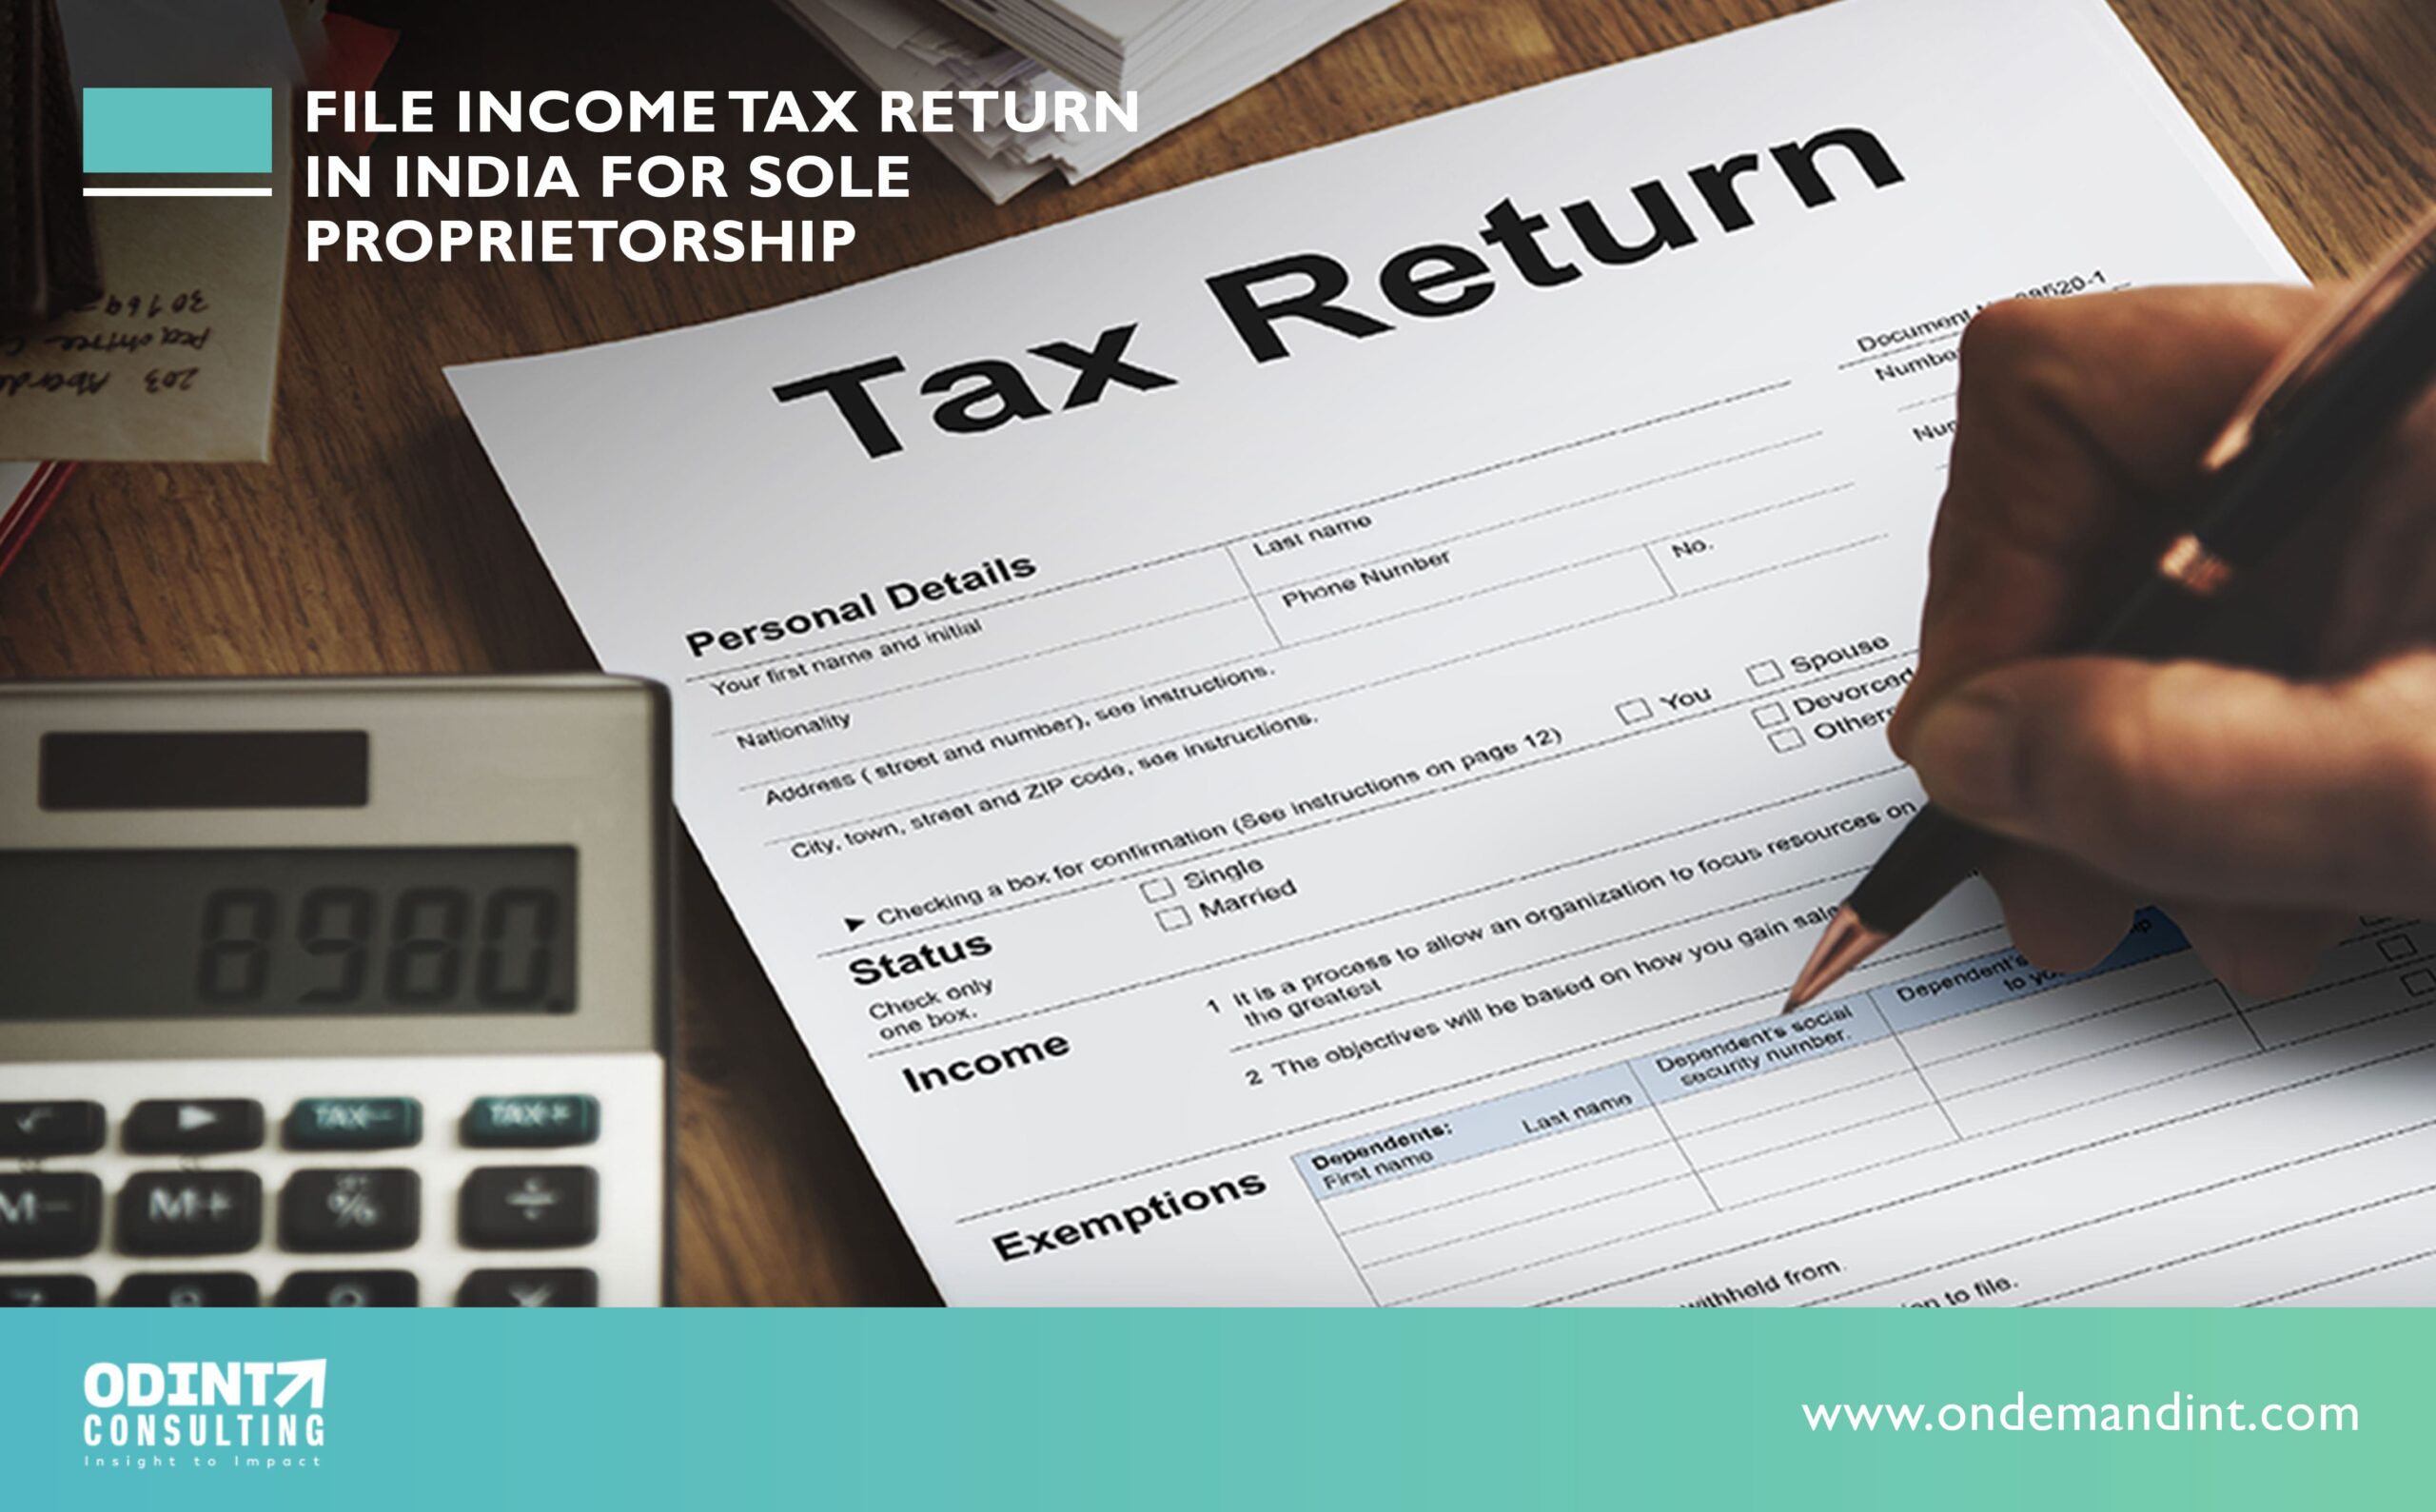 File Income Tax Return in India for Sole Proprietorship in 11 steps: Procedures